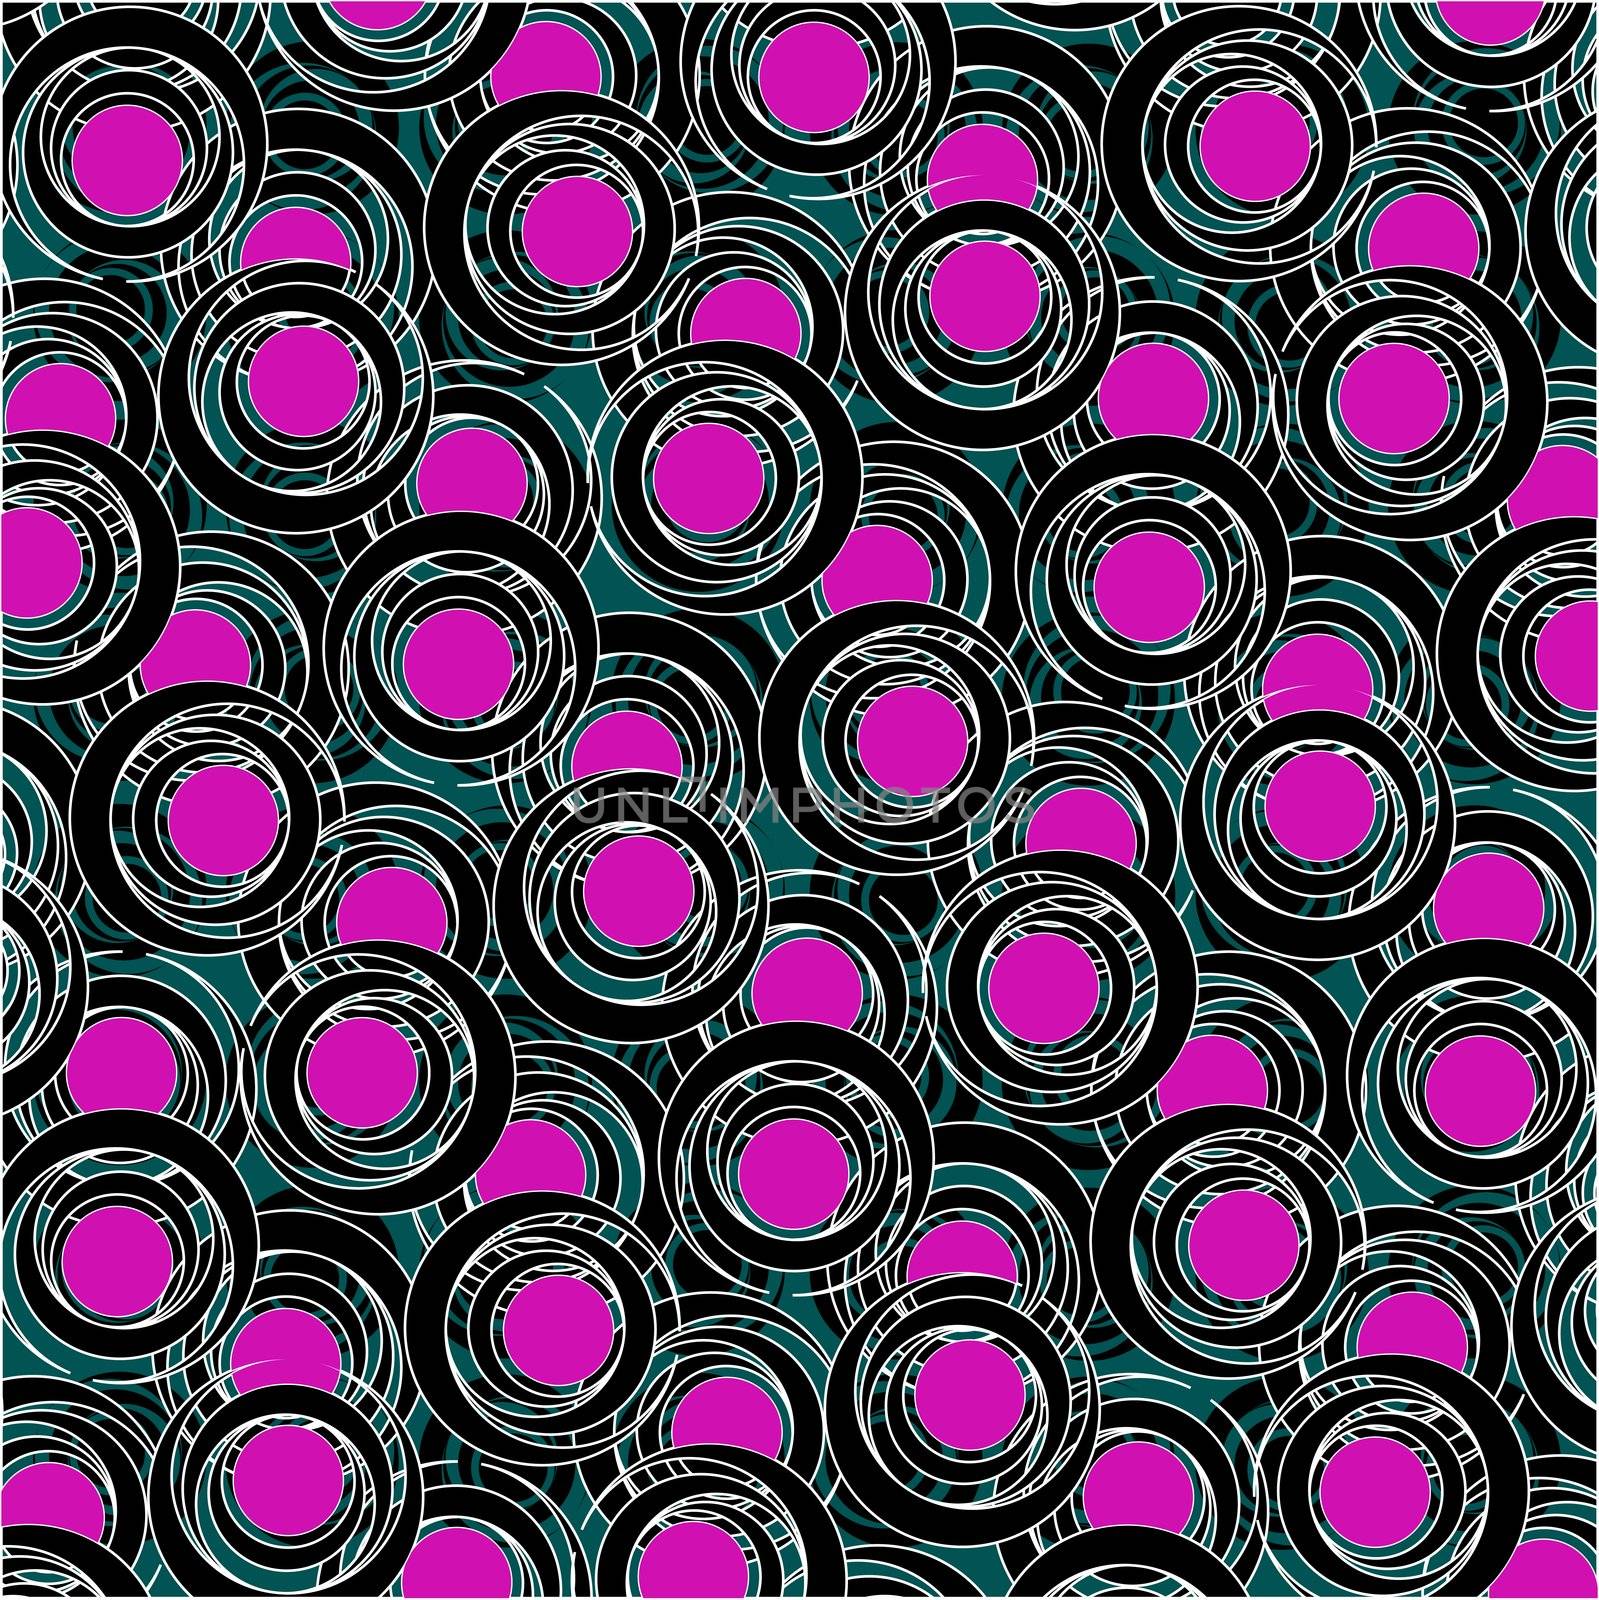 purple and black circle pattern by robertosch